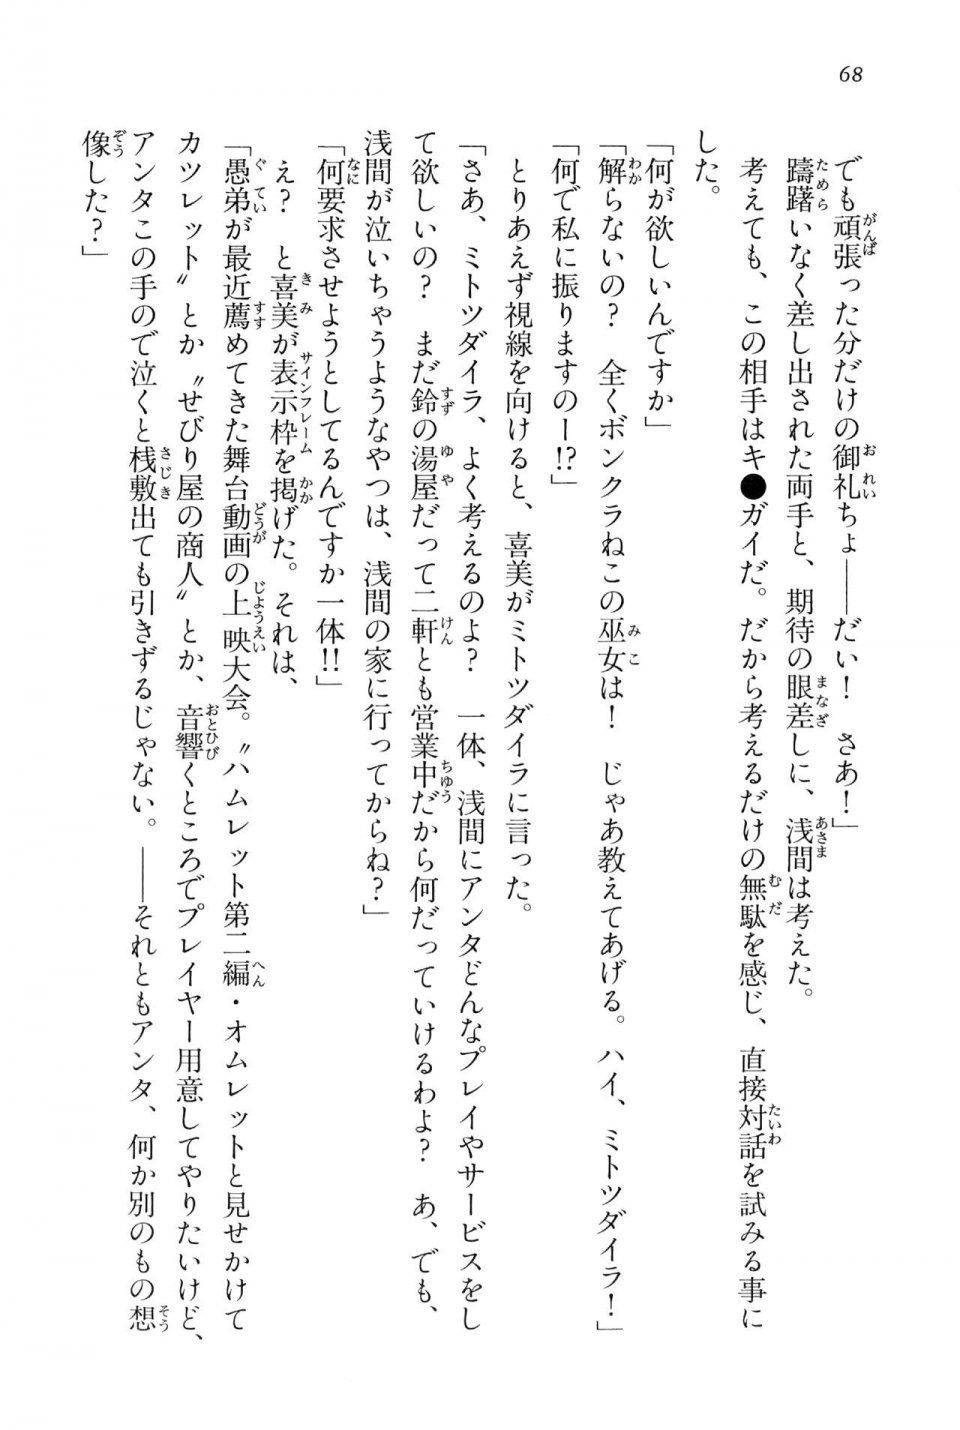 Kyoukai Senjou no Horizon BD Special Mininovel Vol 4(2B) - Photo #72